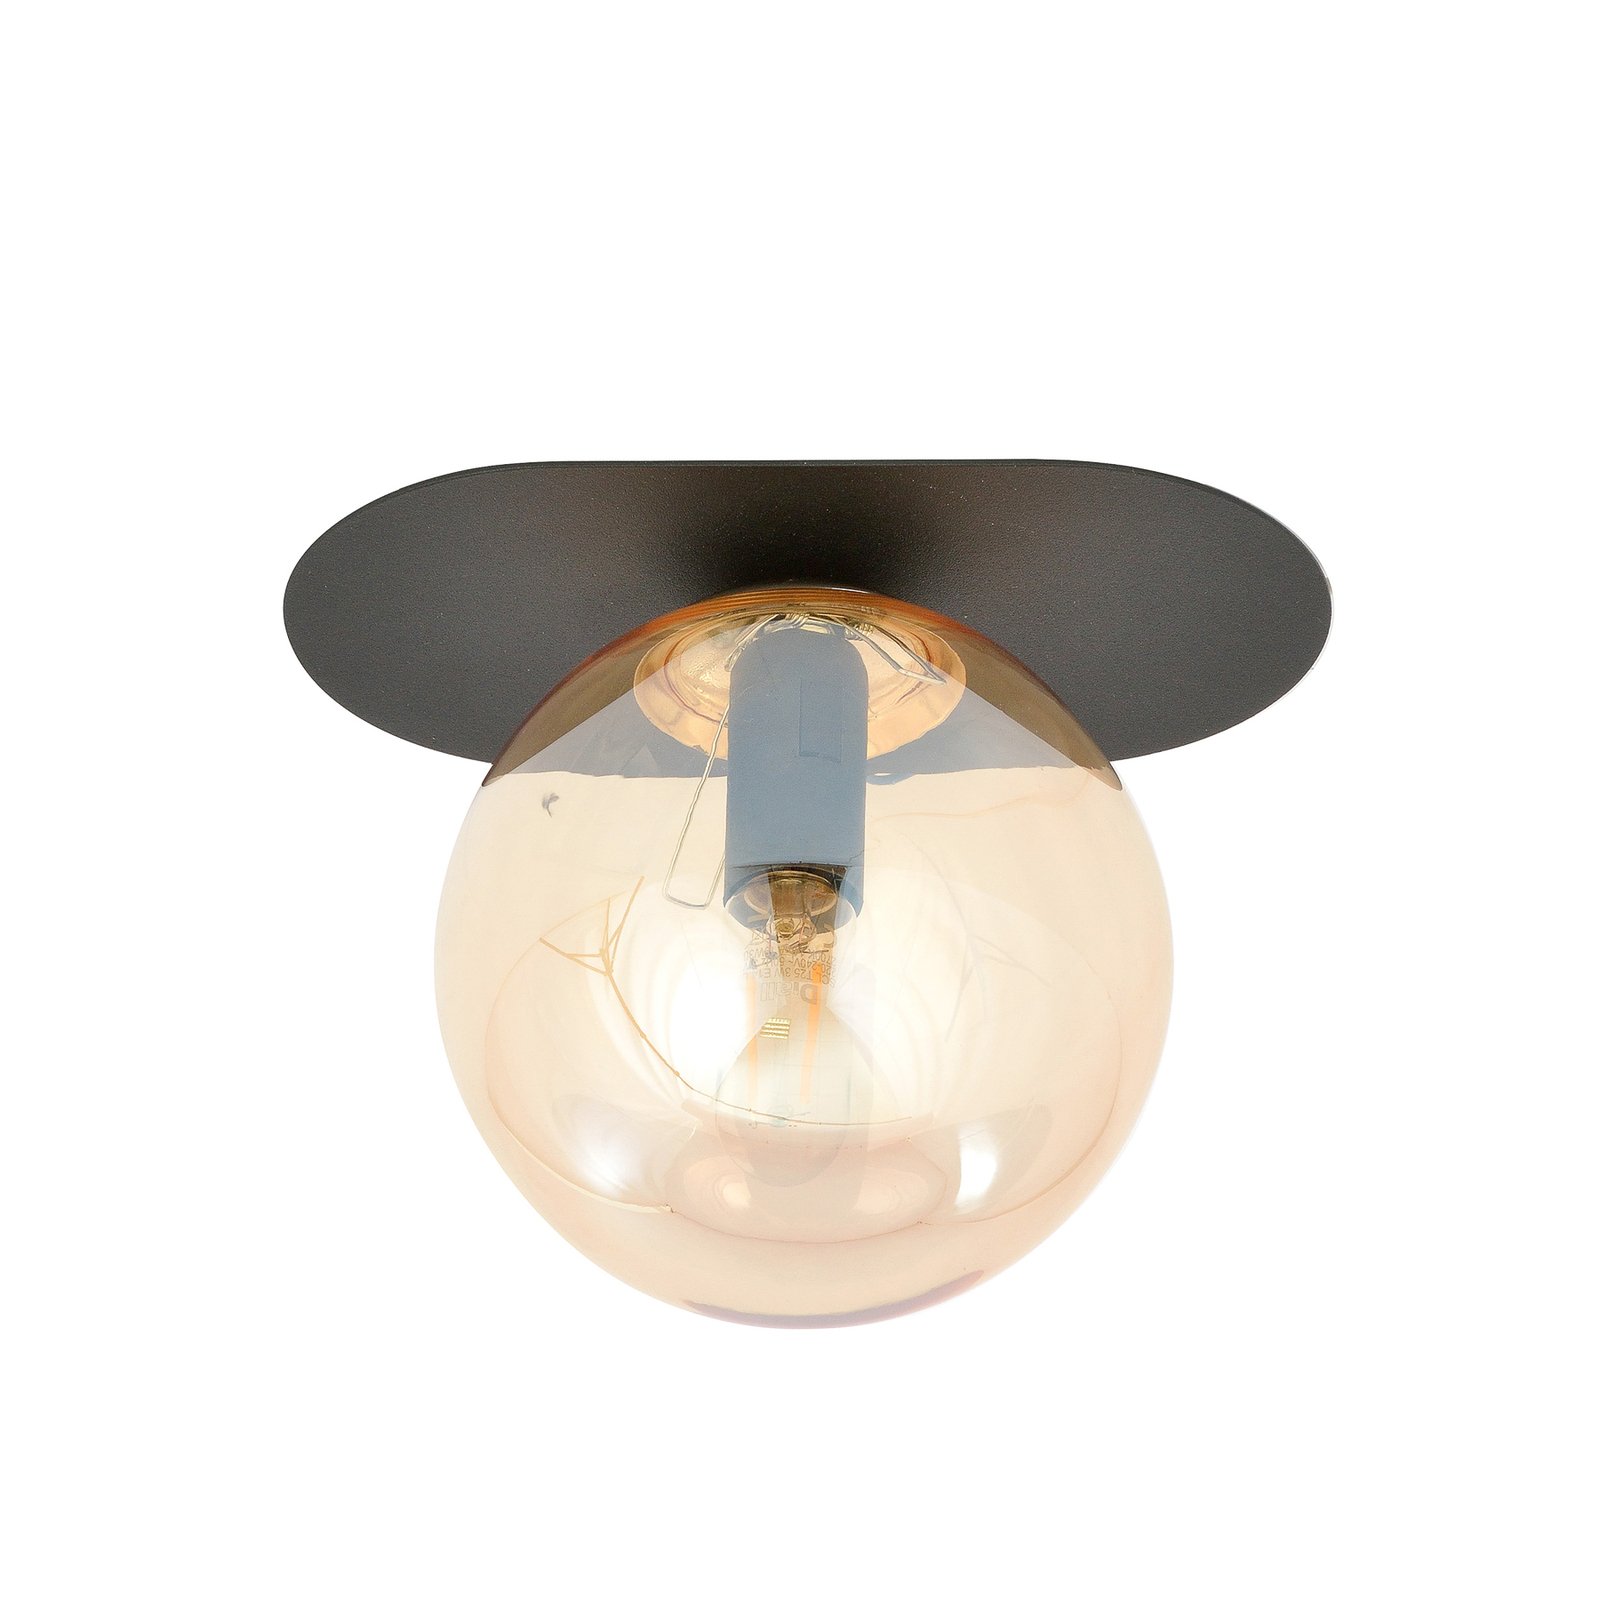 Plaza ceiling lamp, black/amber, one-bulb